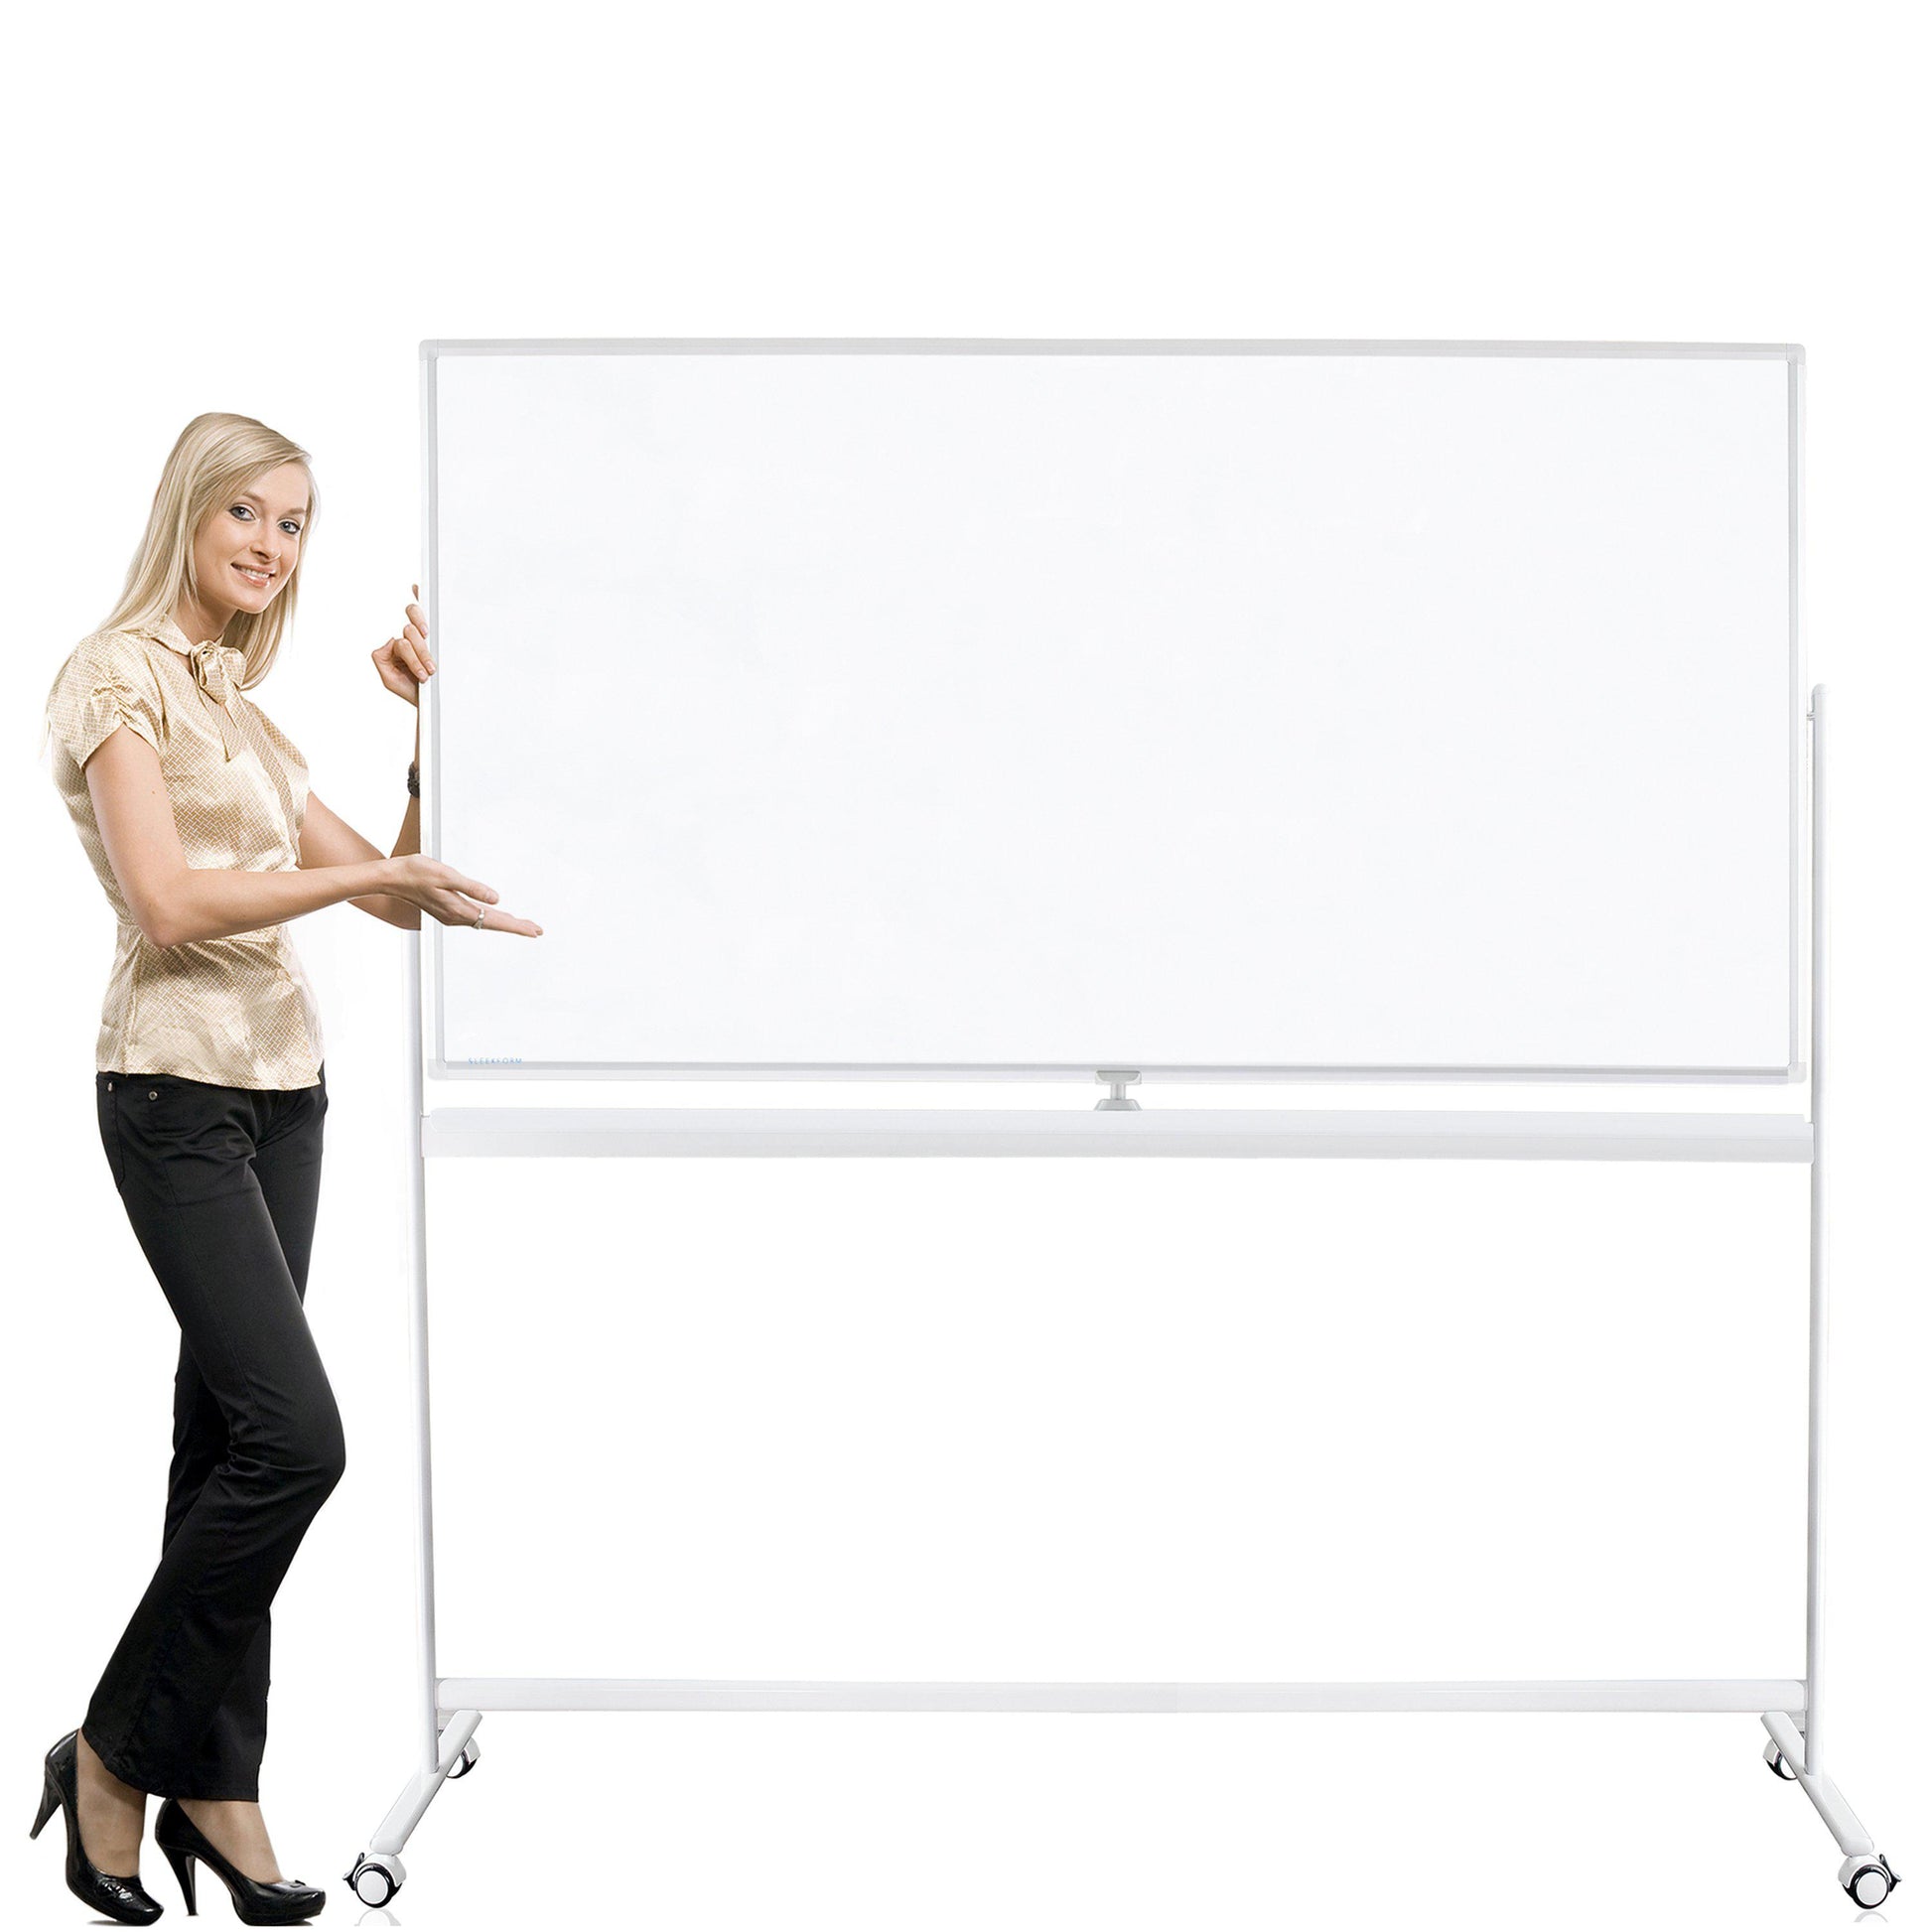 The Sleekform Whiteboard. - Sleekform Furniture